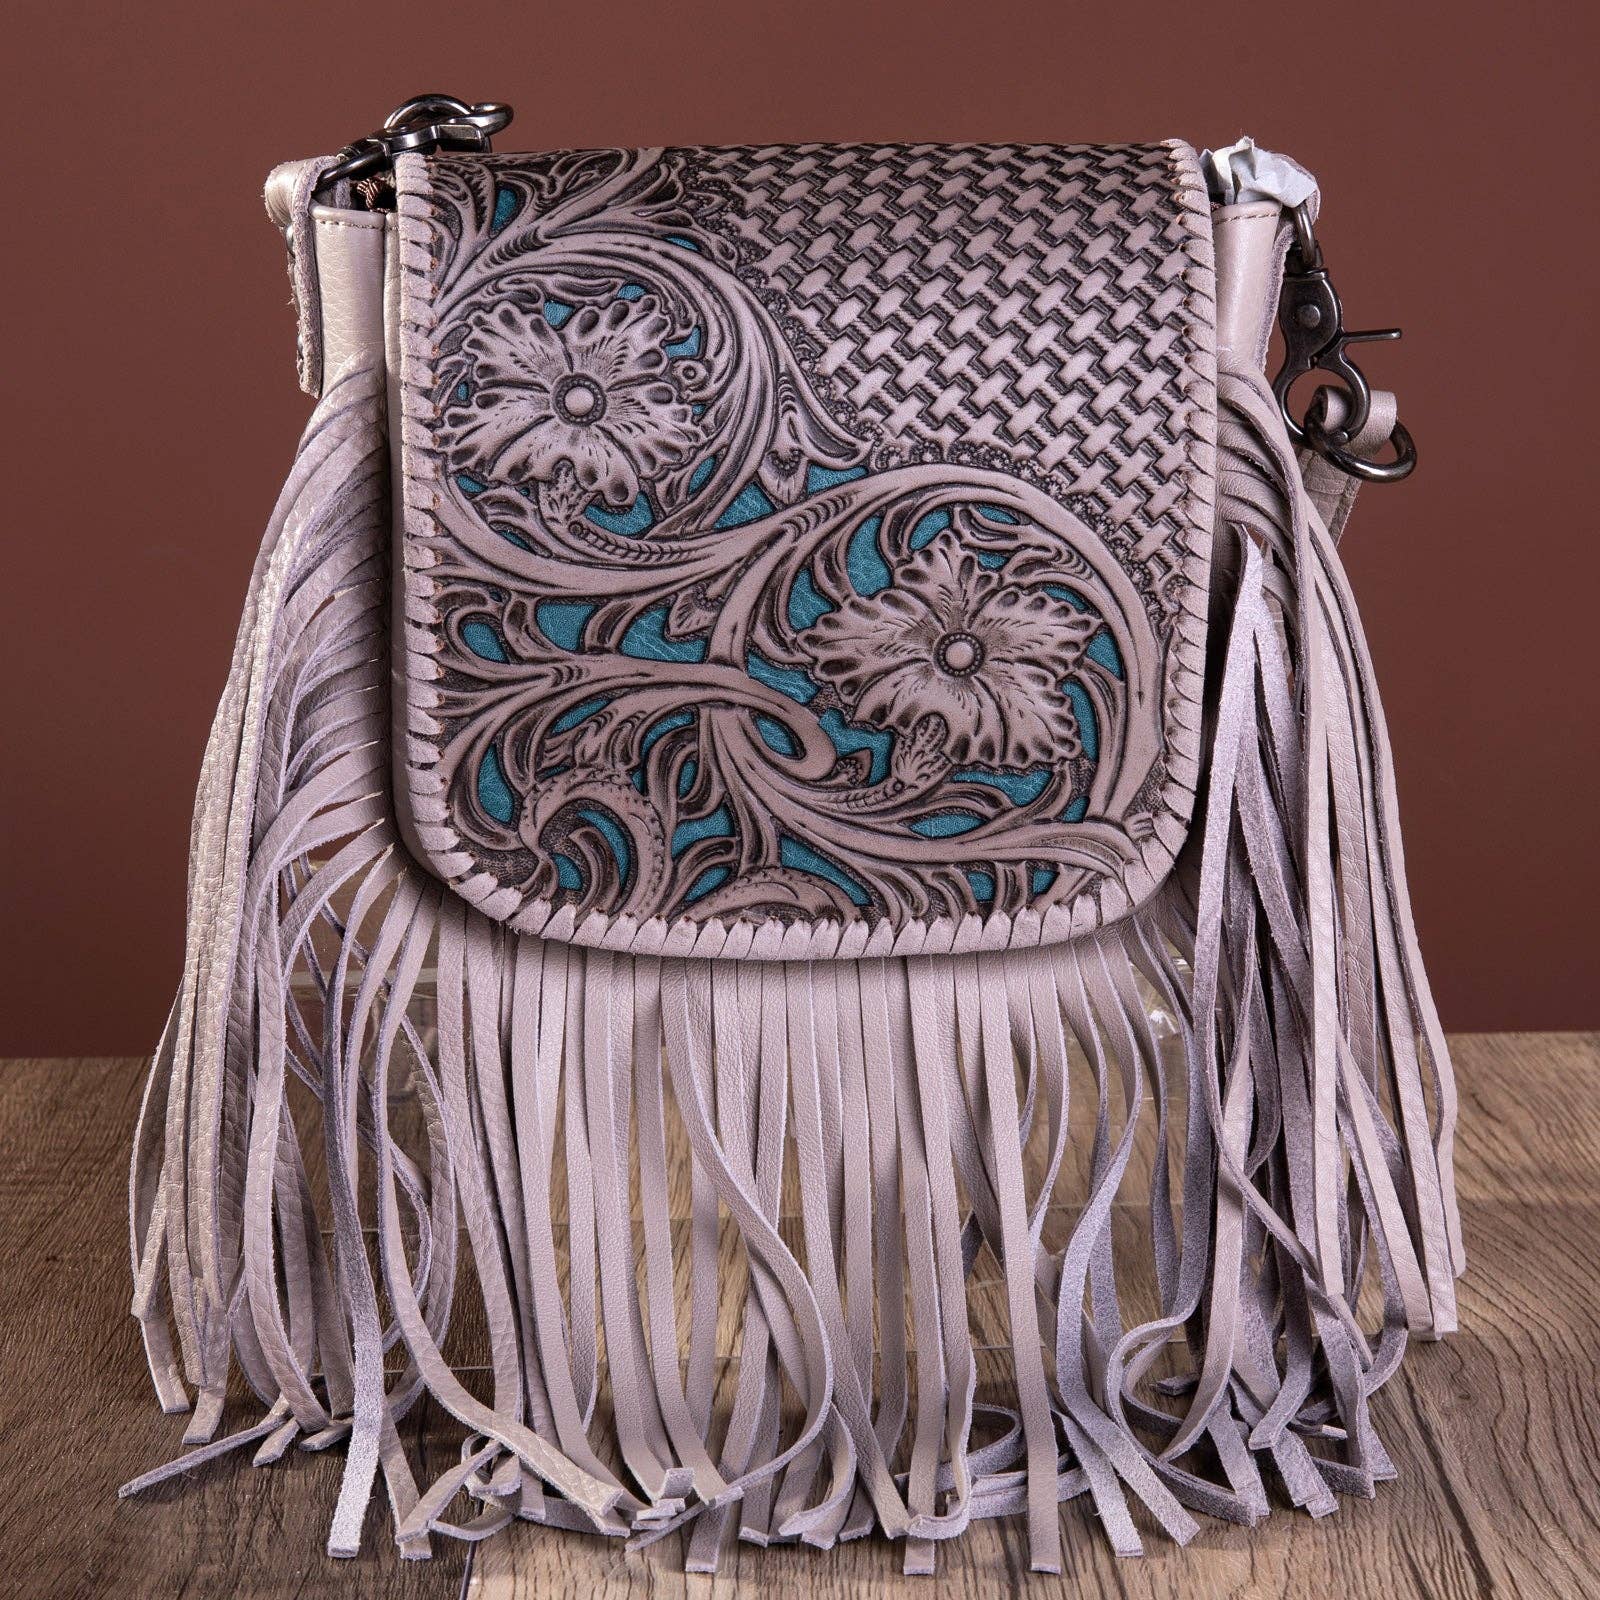 Montana West Trinity Ranch Brown Studded Tooled Purse Handbag | eBay